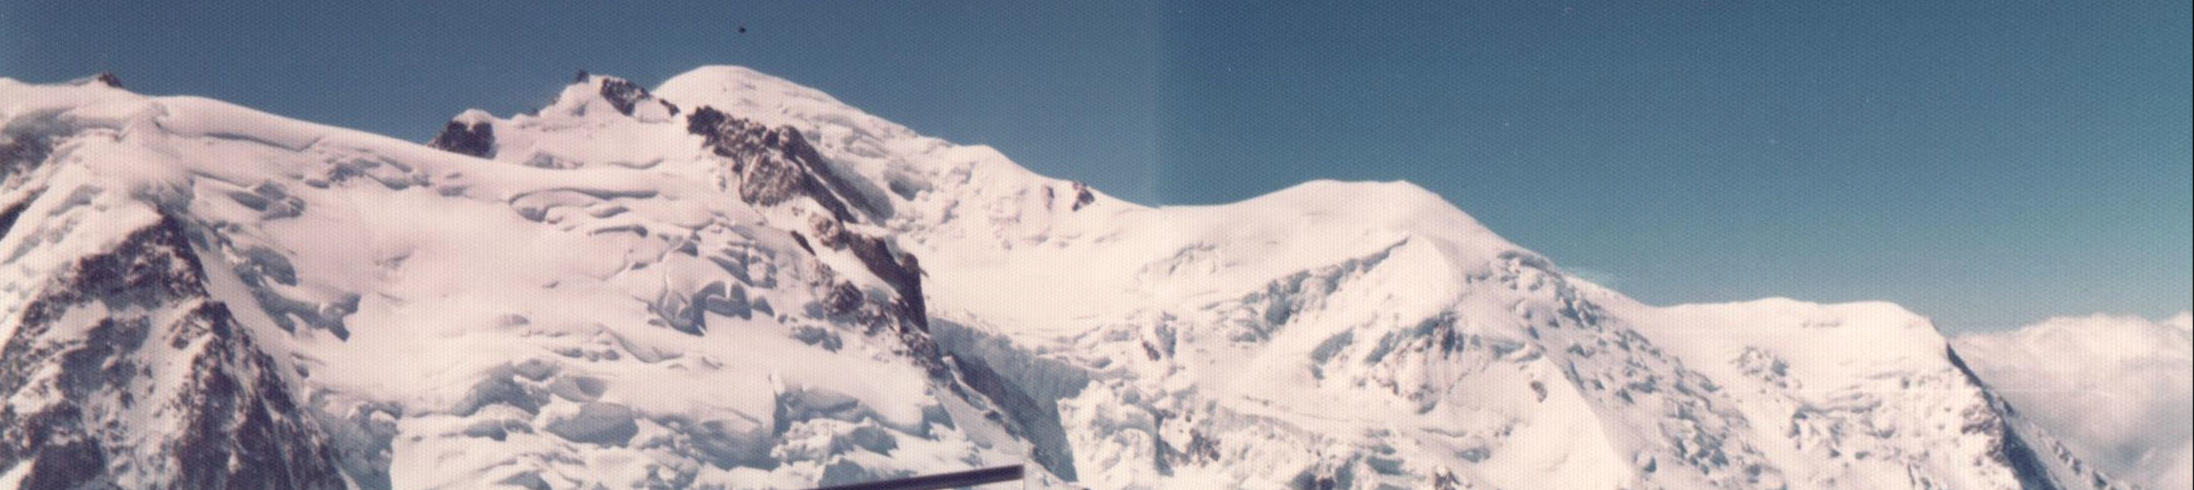 Mont Blanc from Refuge des Cosmiques